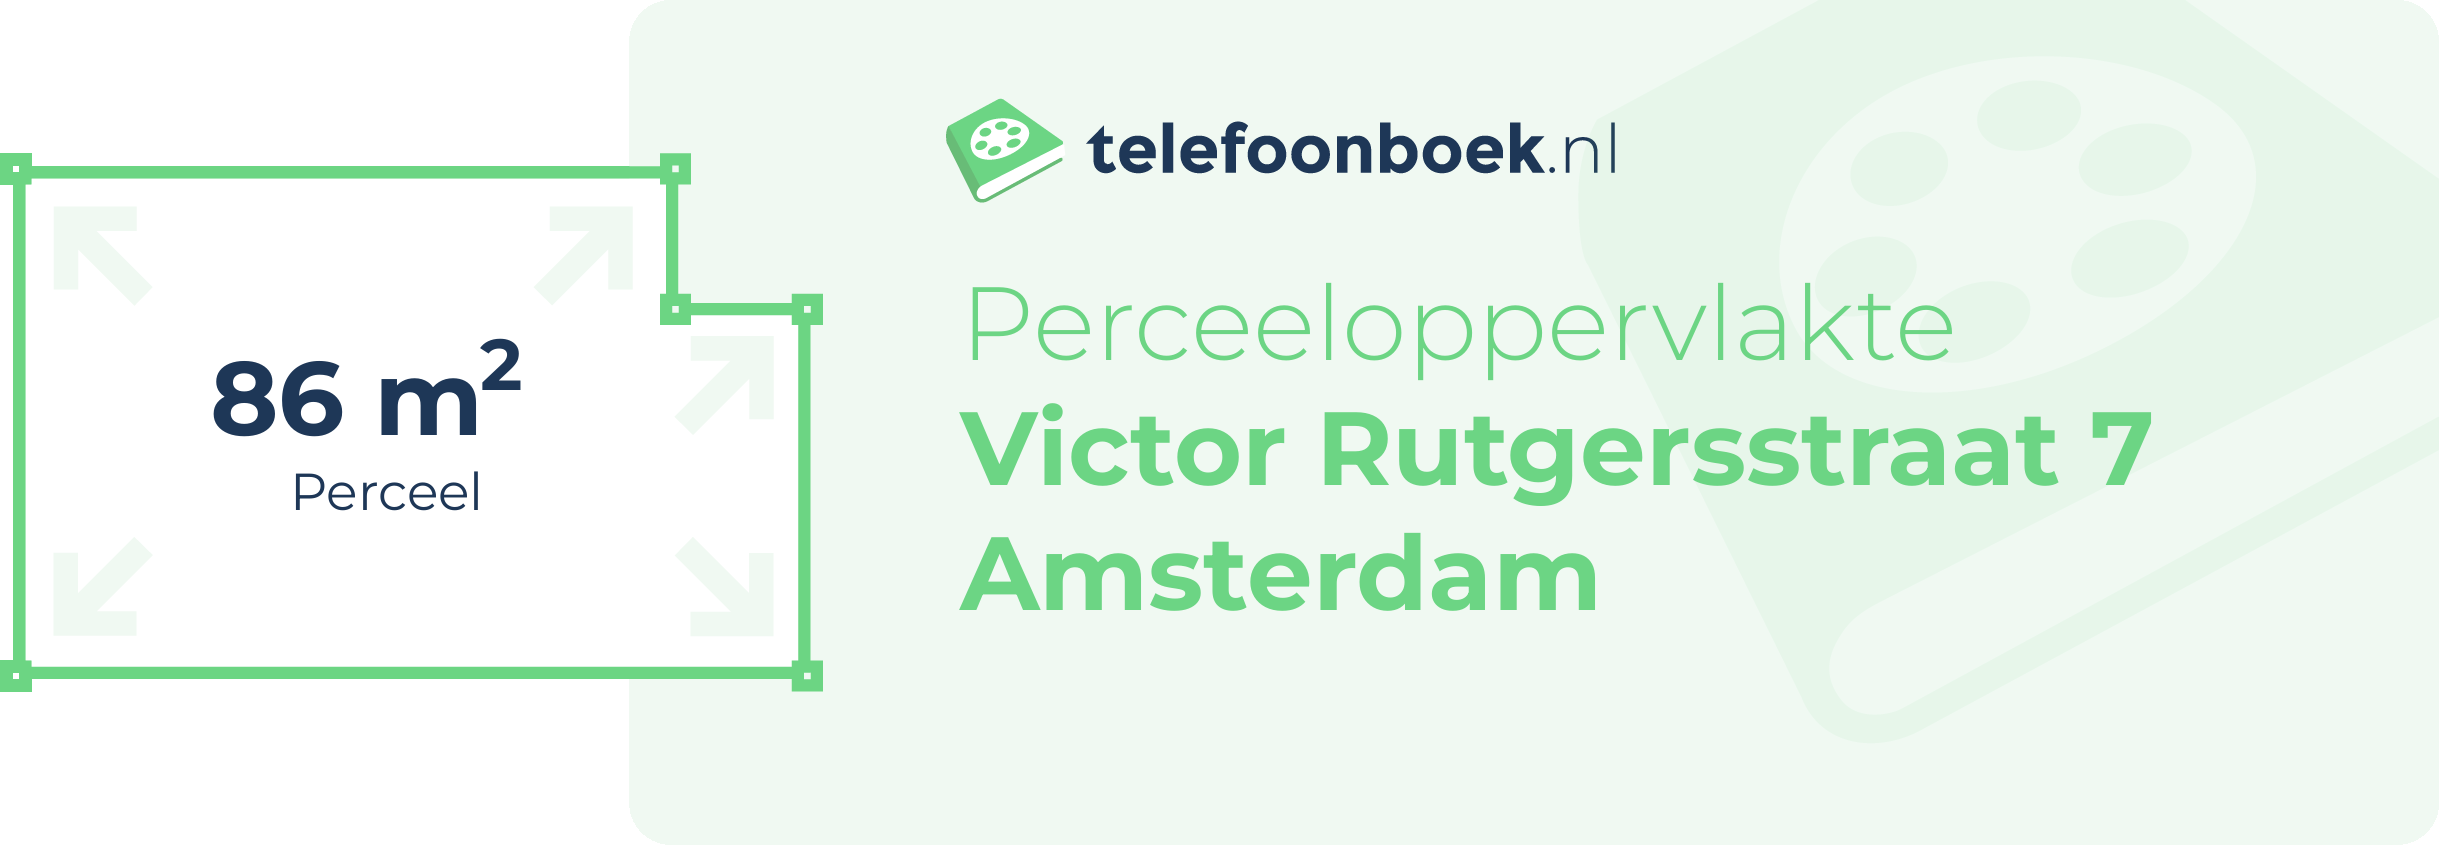 Perceeloppervlakte Victor Rutgersstraat 7 Amsterdam